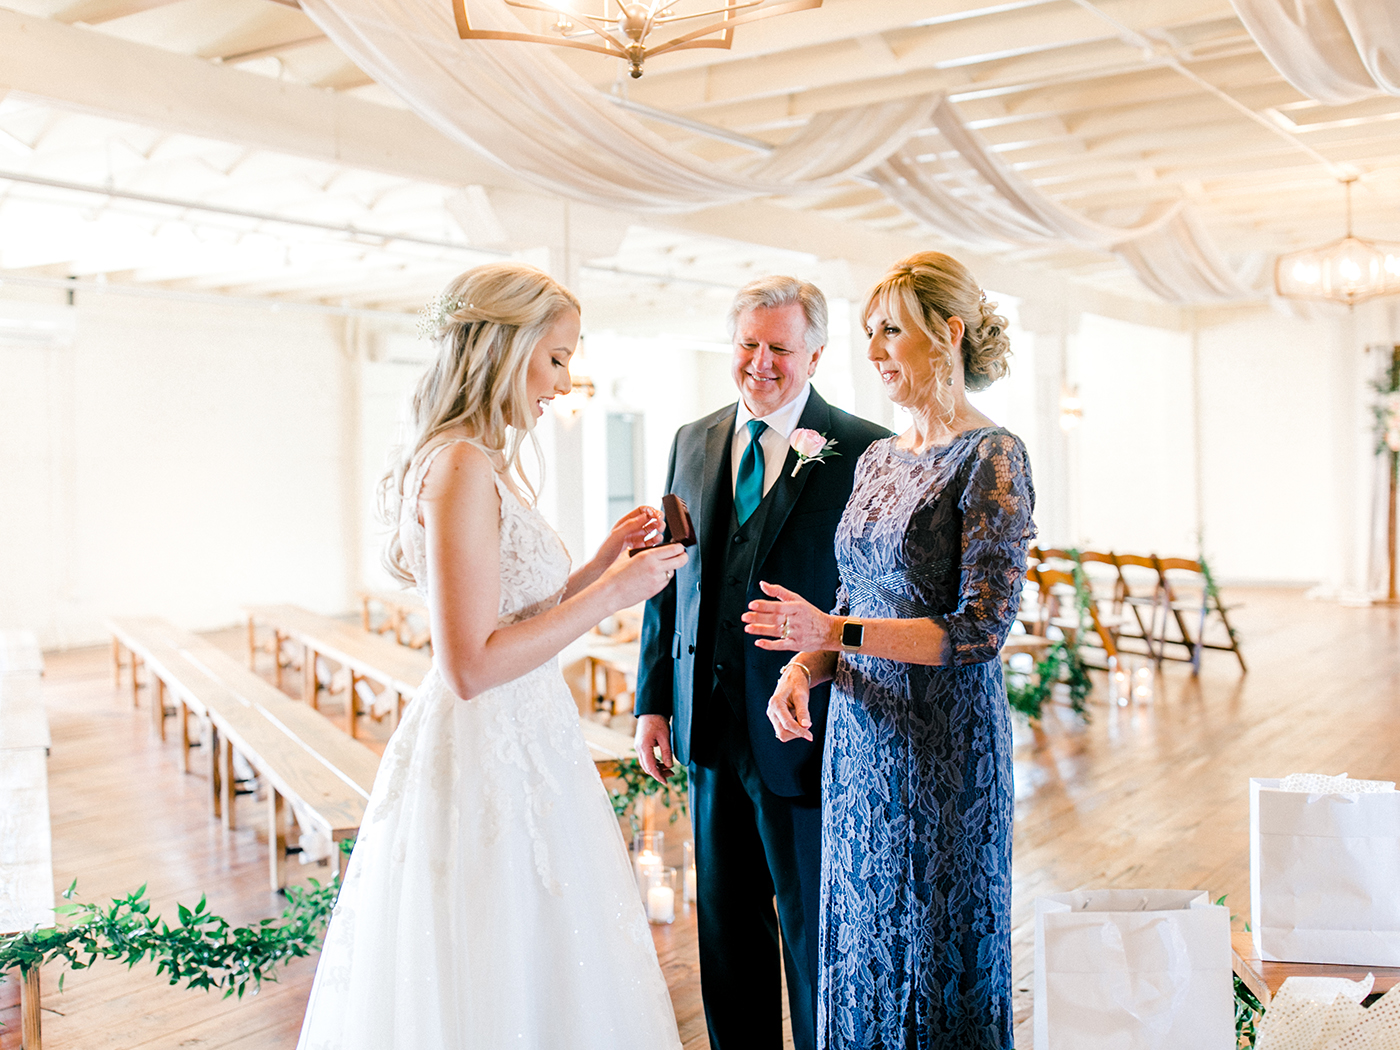 DFW Wedding at BRIK | A Stylish Soiree, Wedding Planner + Florist